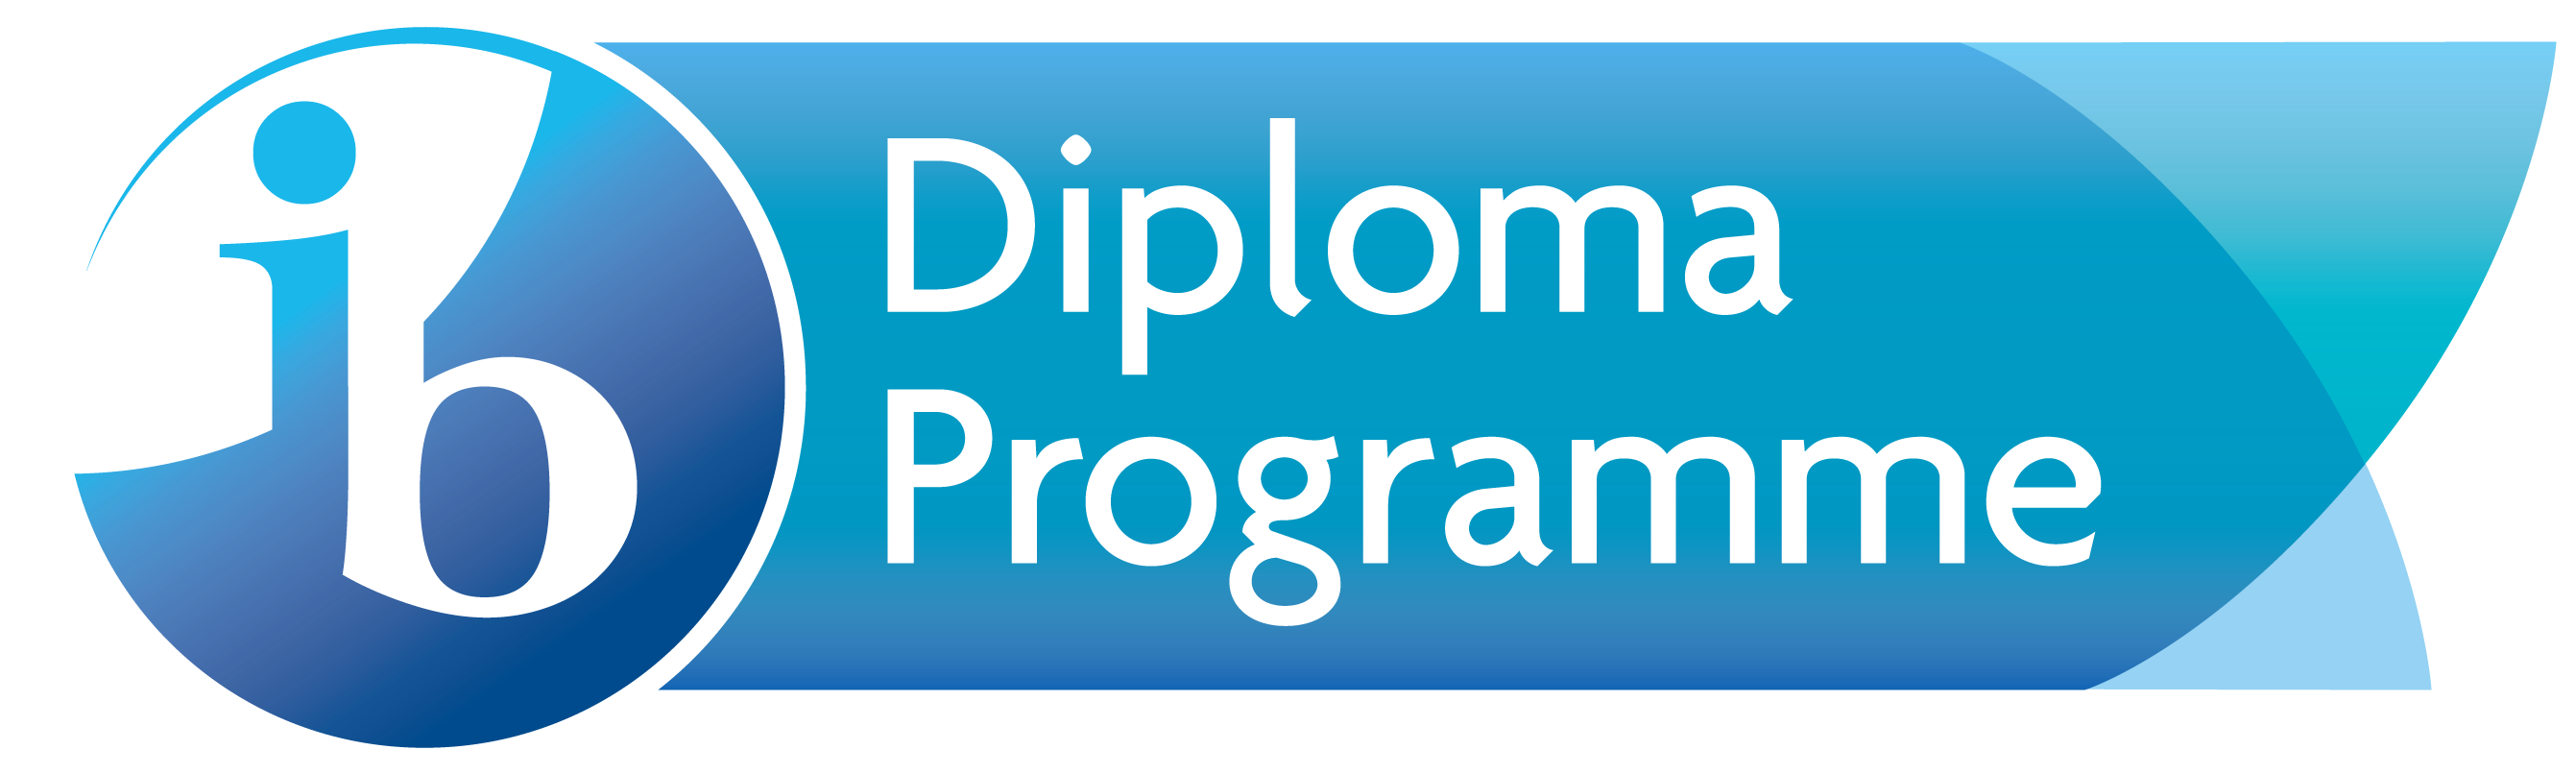 Diploma Program written on a blue rectangle